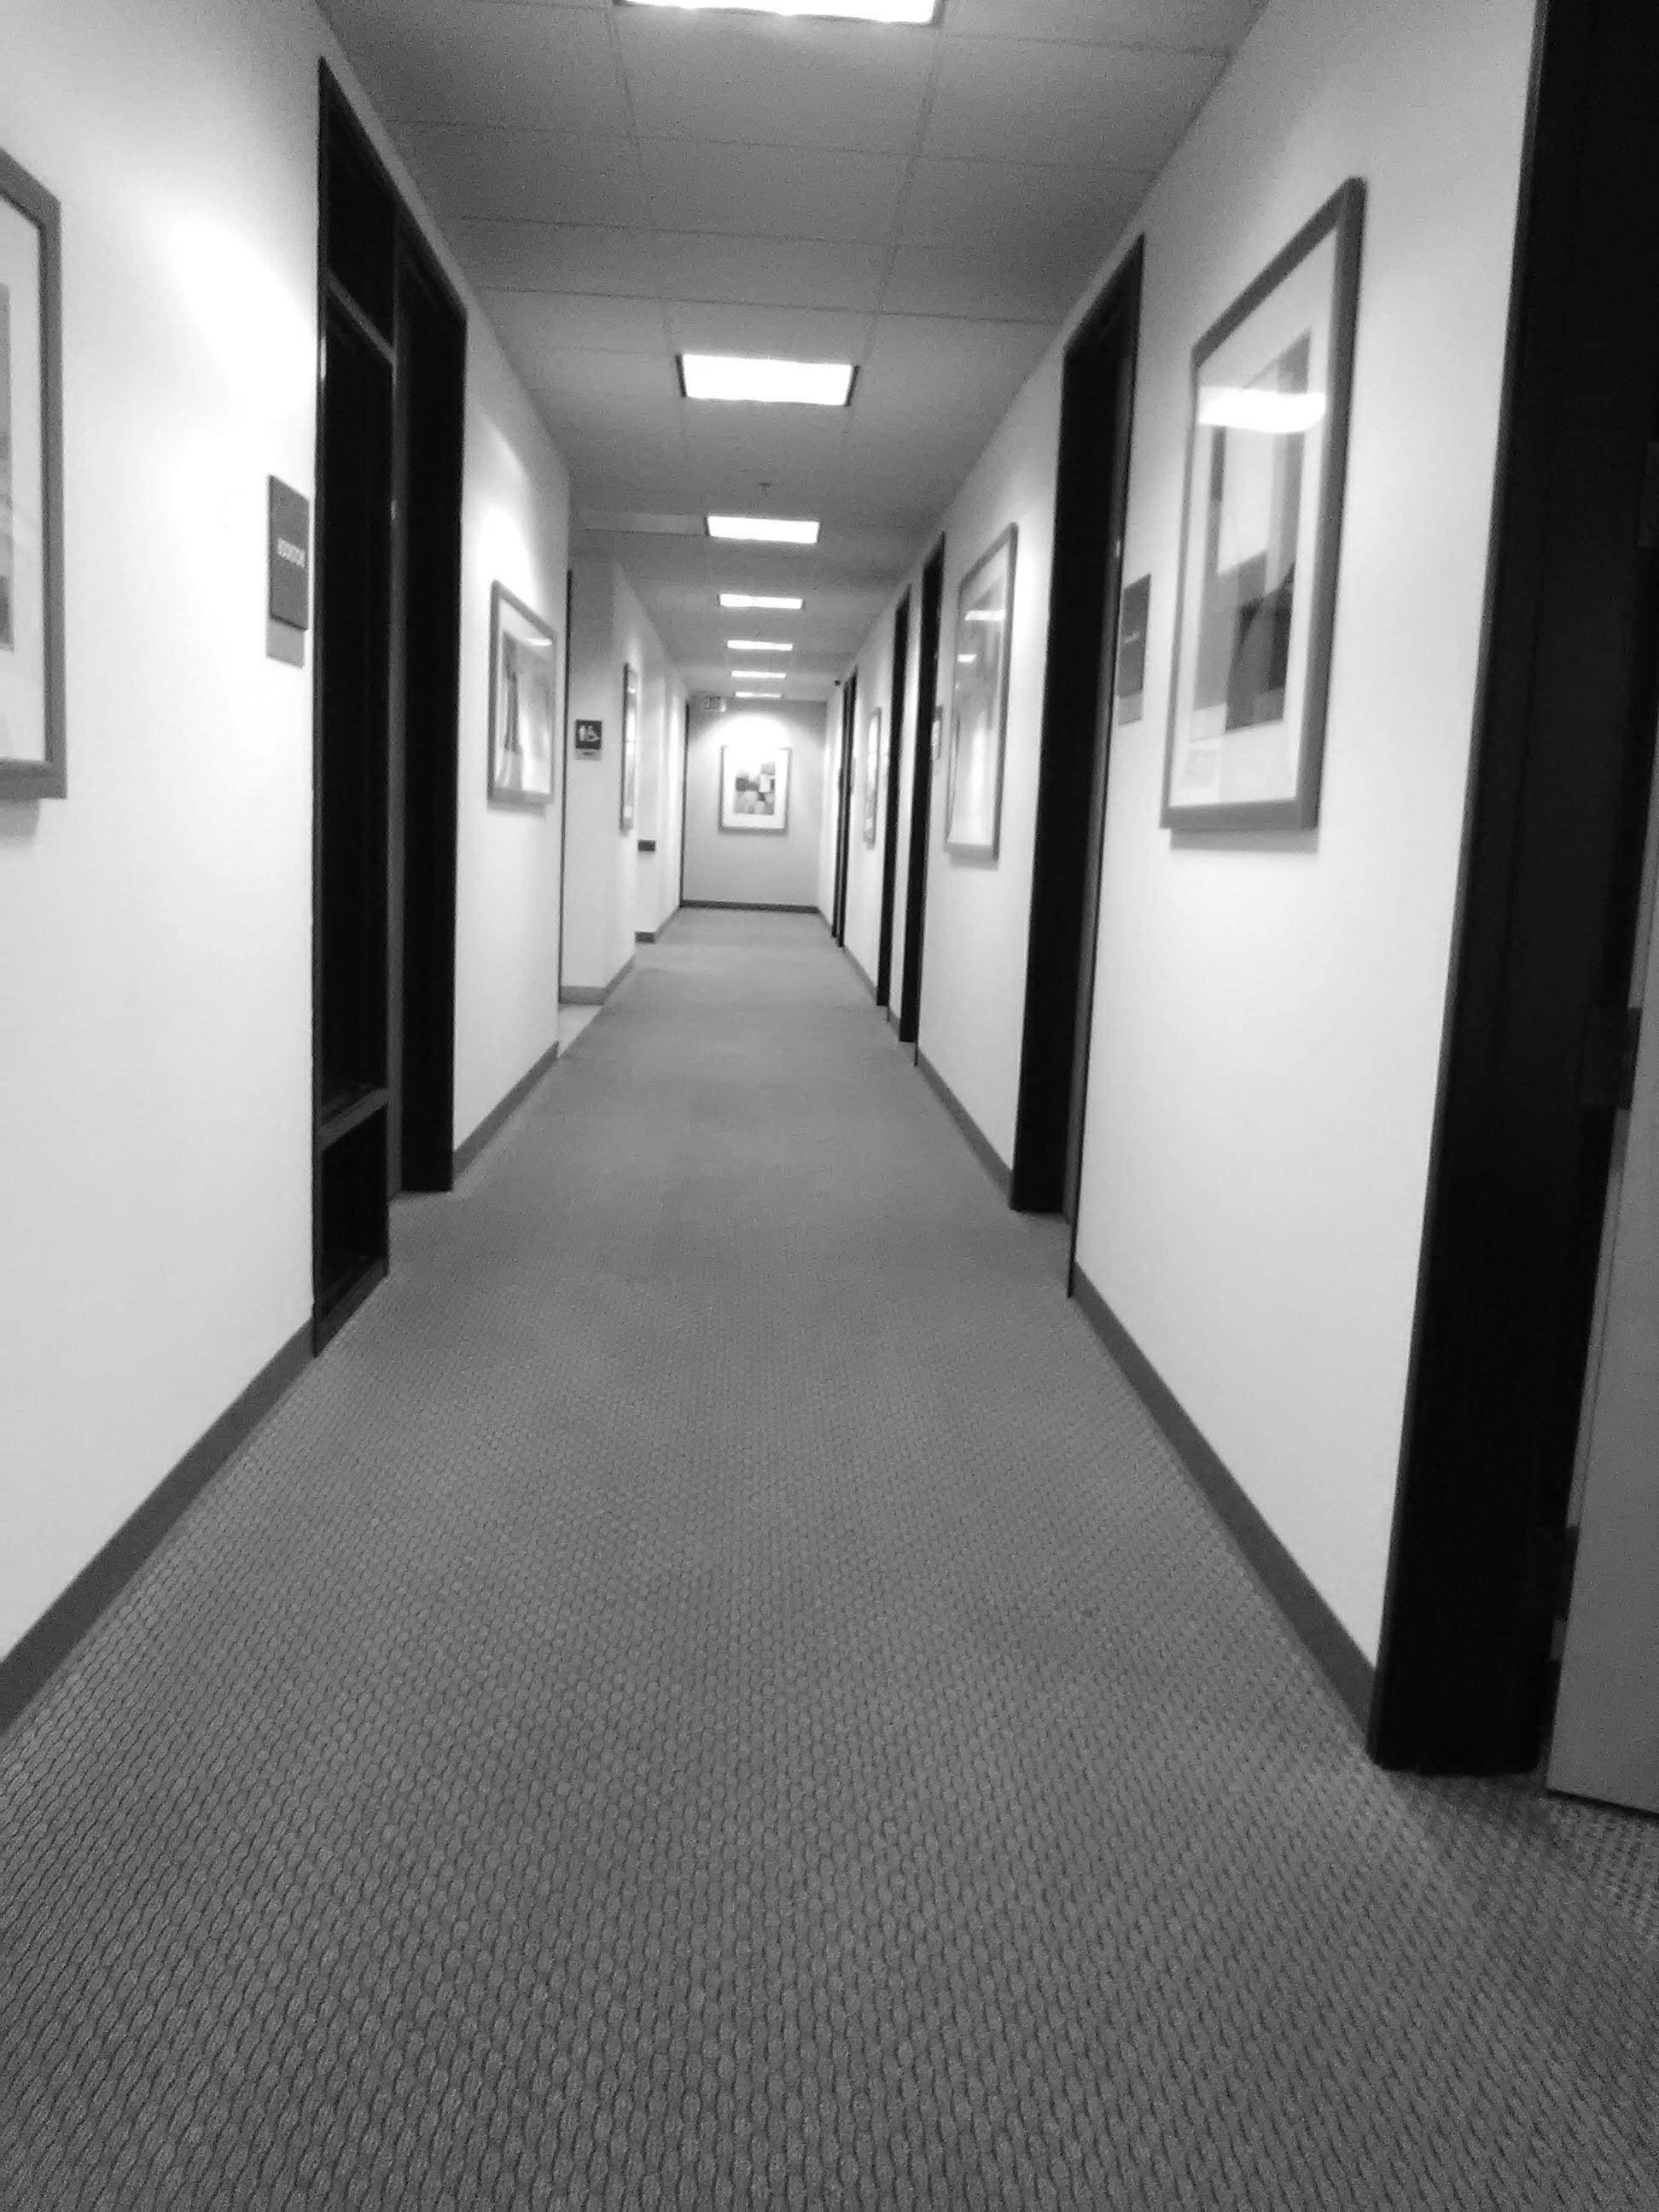 Free stock photo of #blackandwhite #Office #hallway